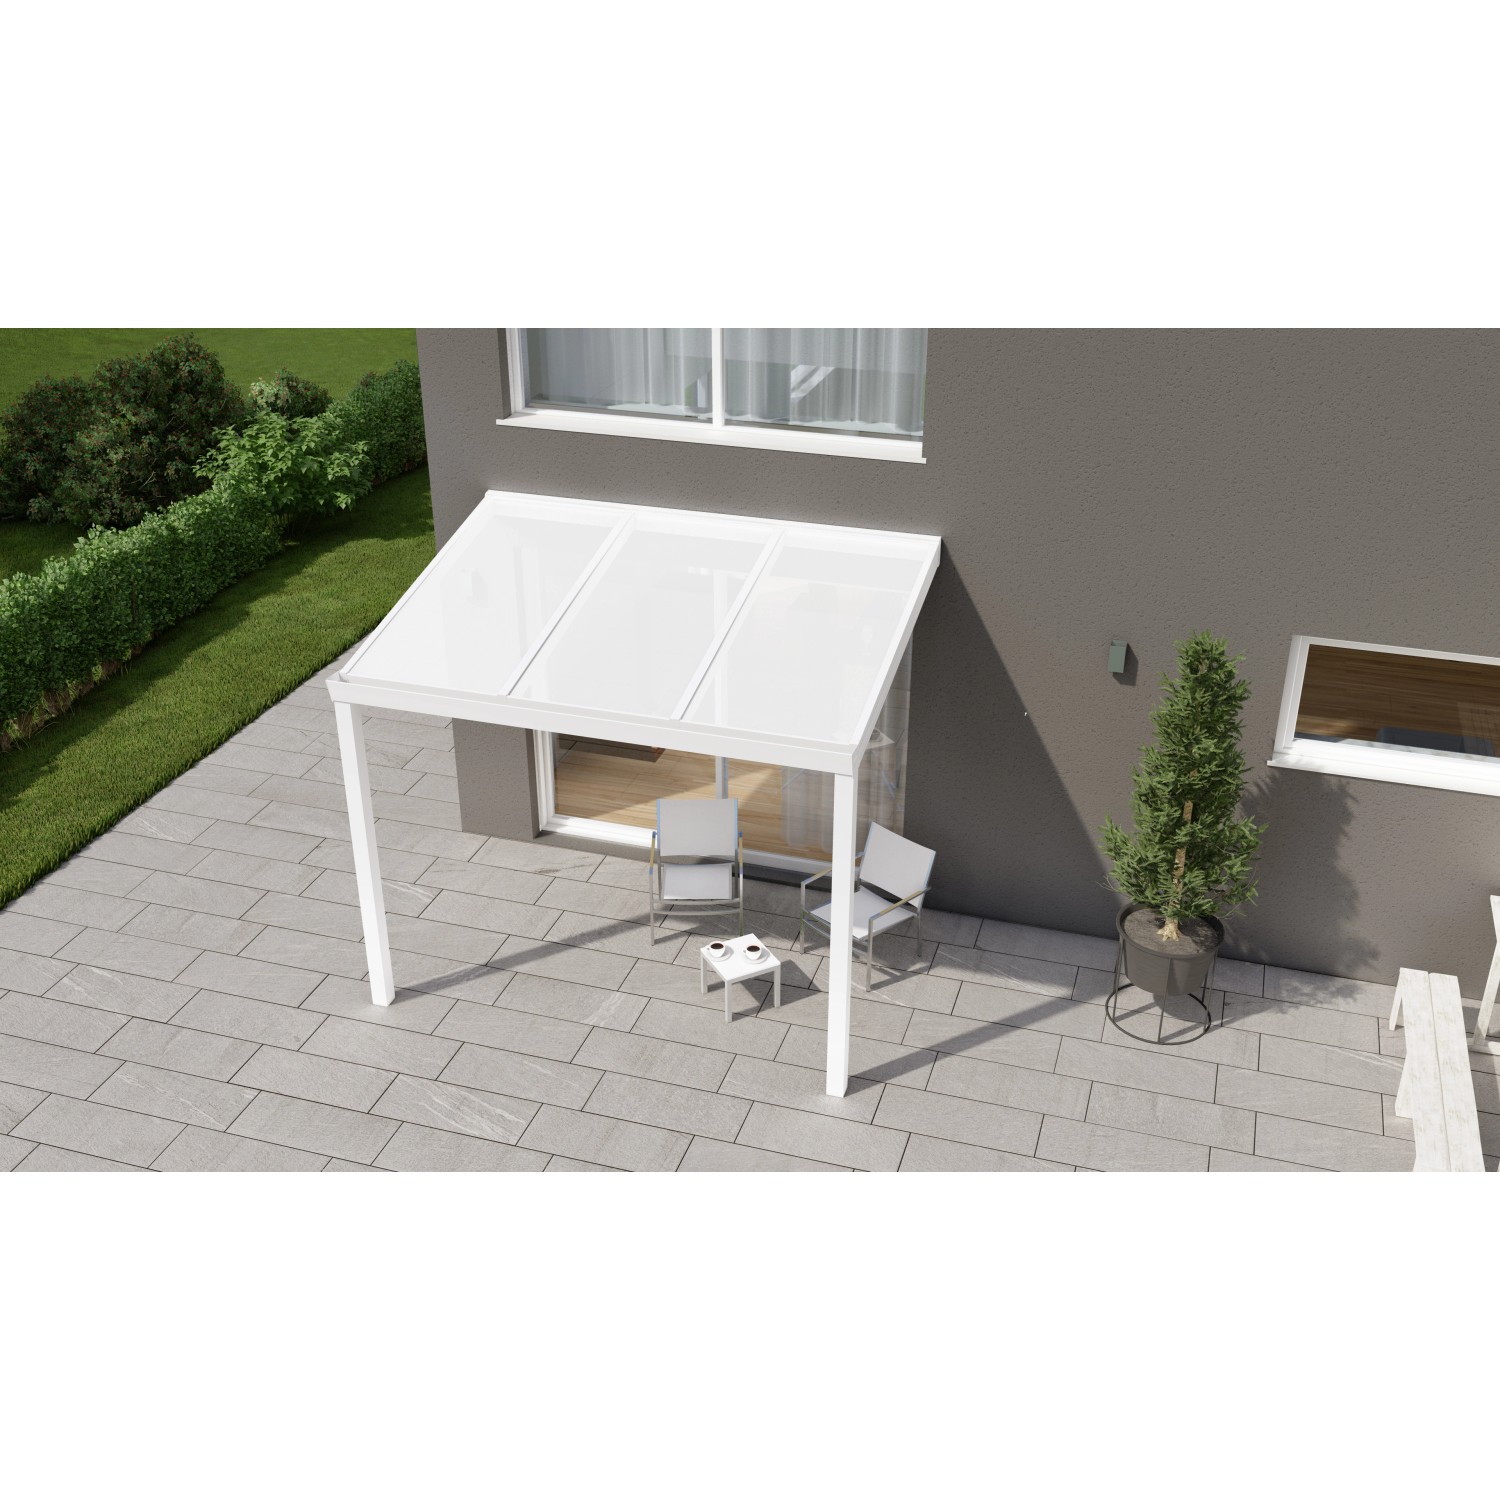 Terrassenüberdachung Professional 300 cm x 200 cm Weiß PC Opal von GARDENDREAMS